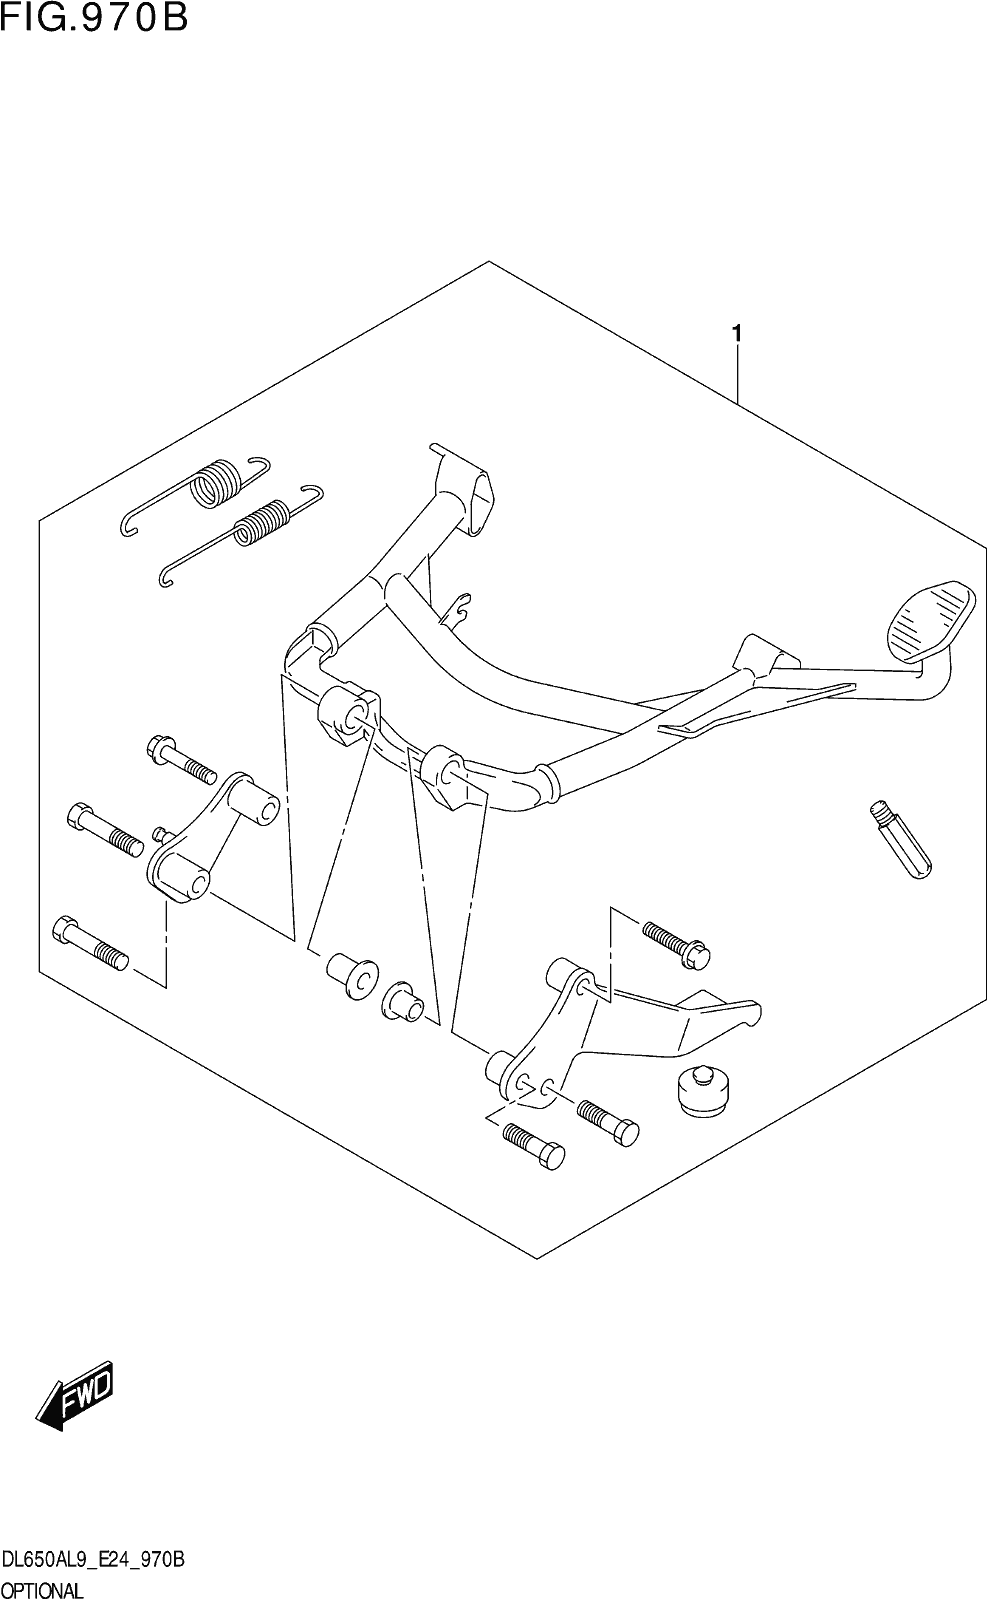 Fig.970b Optional (center Stand Set)